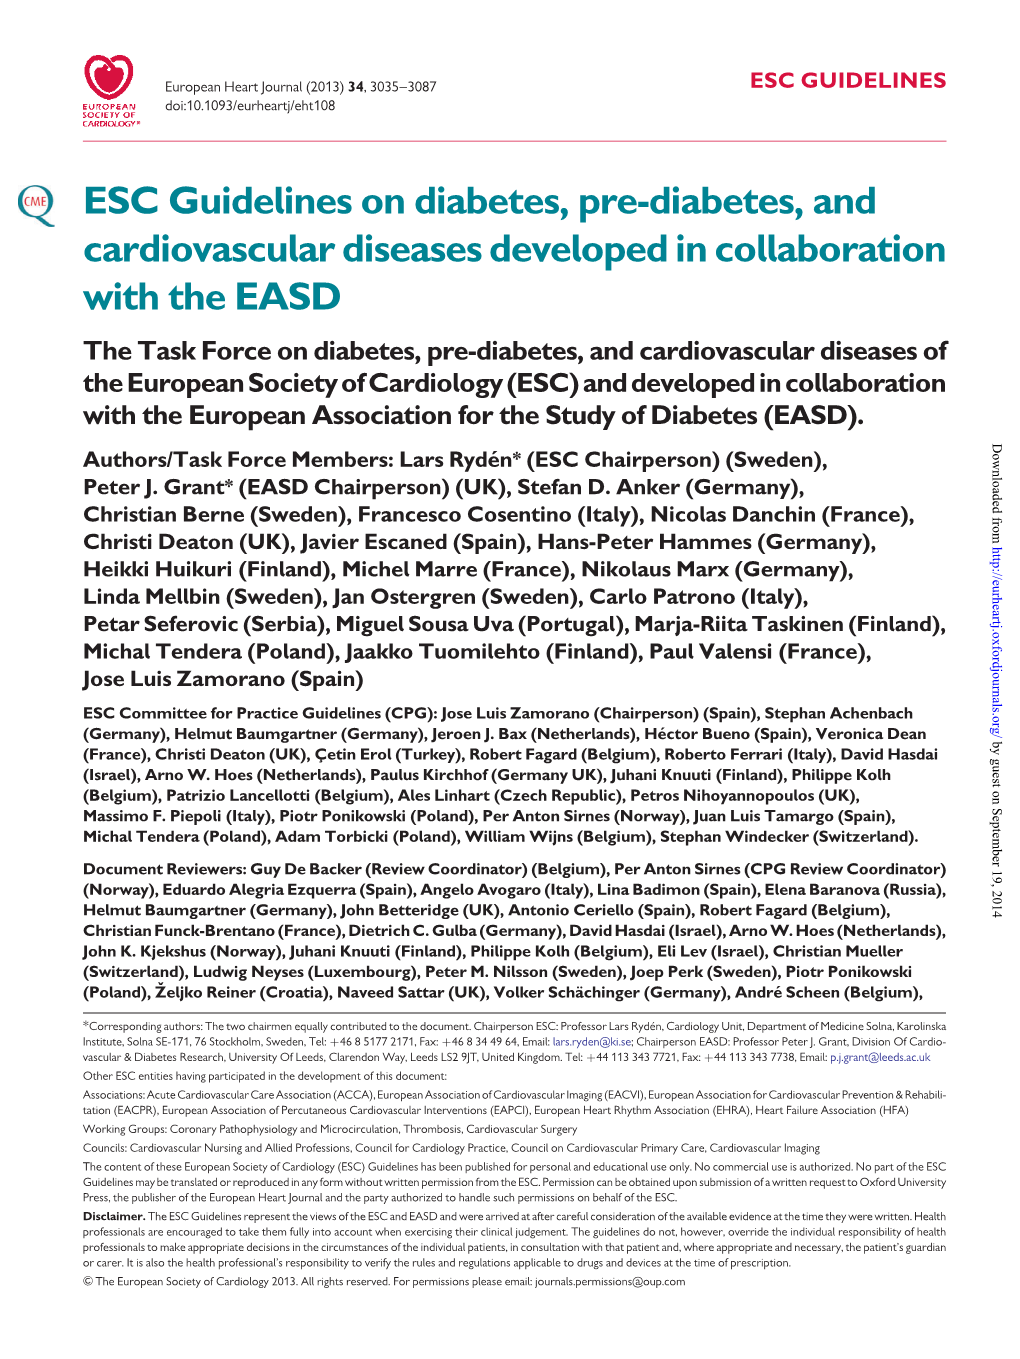 ESC Guidelines on Diabetes, Pre-Diabetes, And